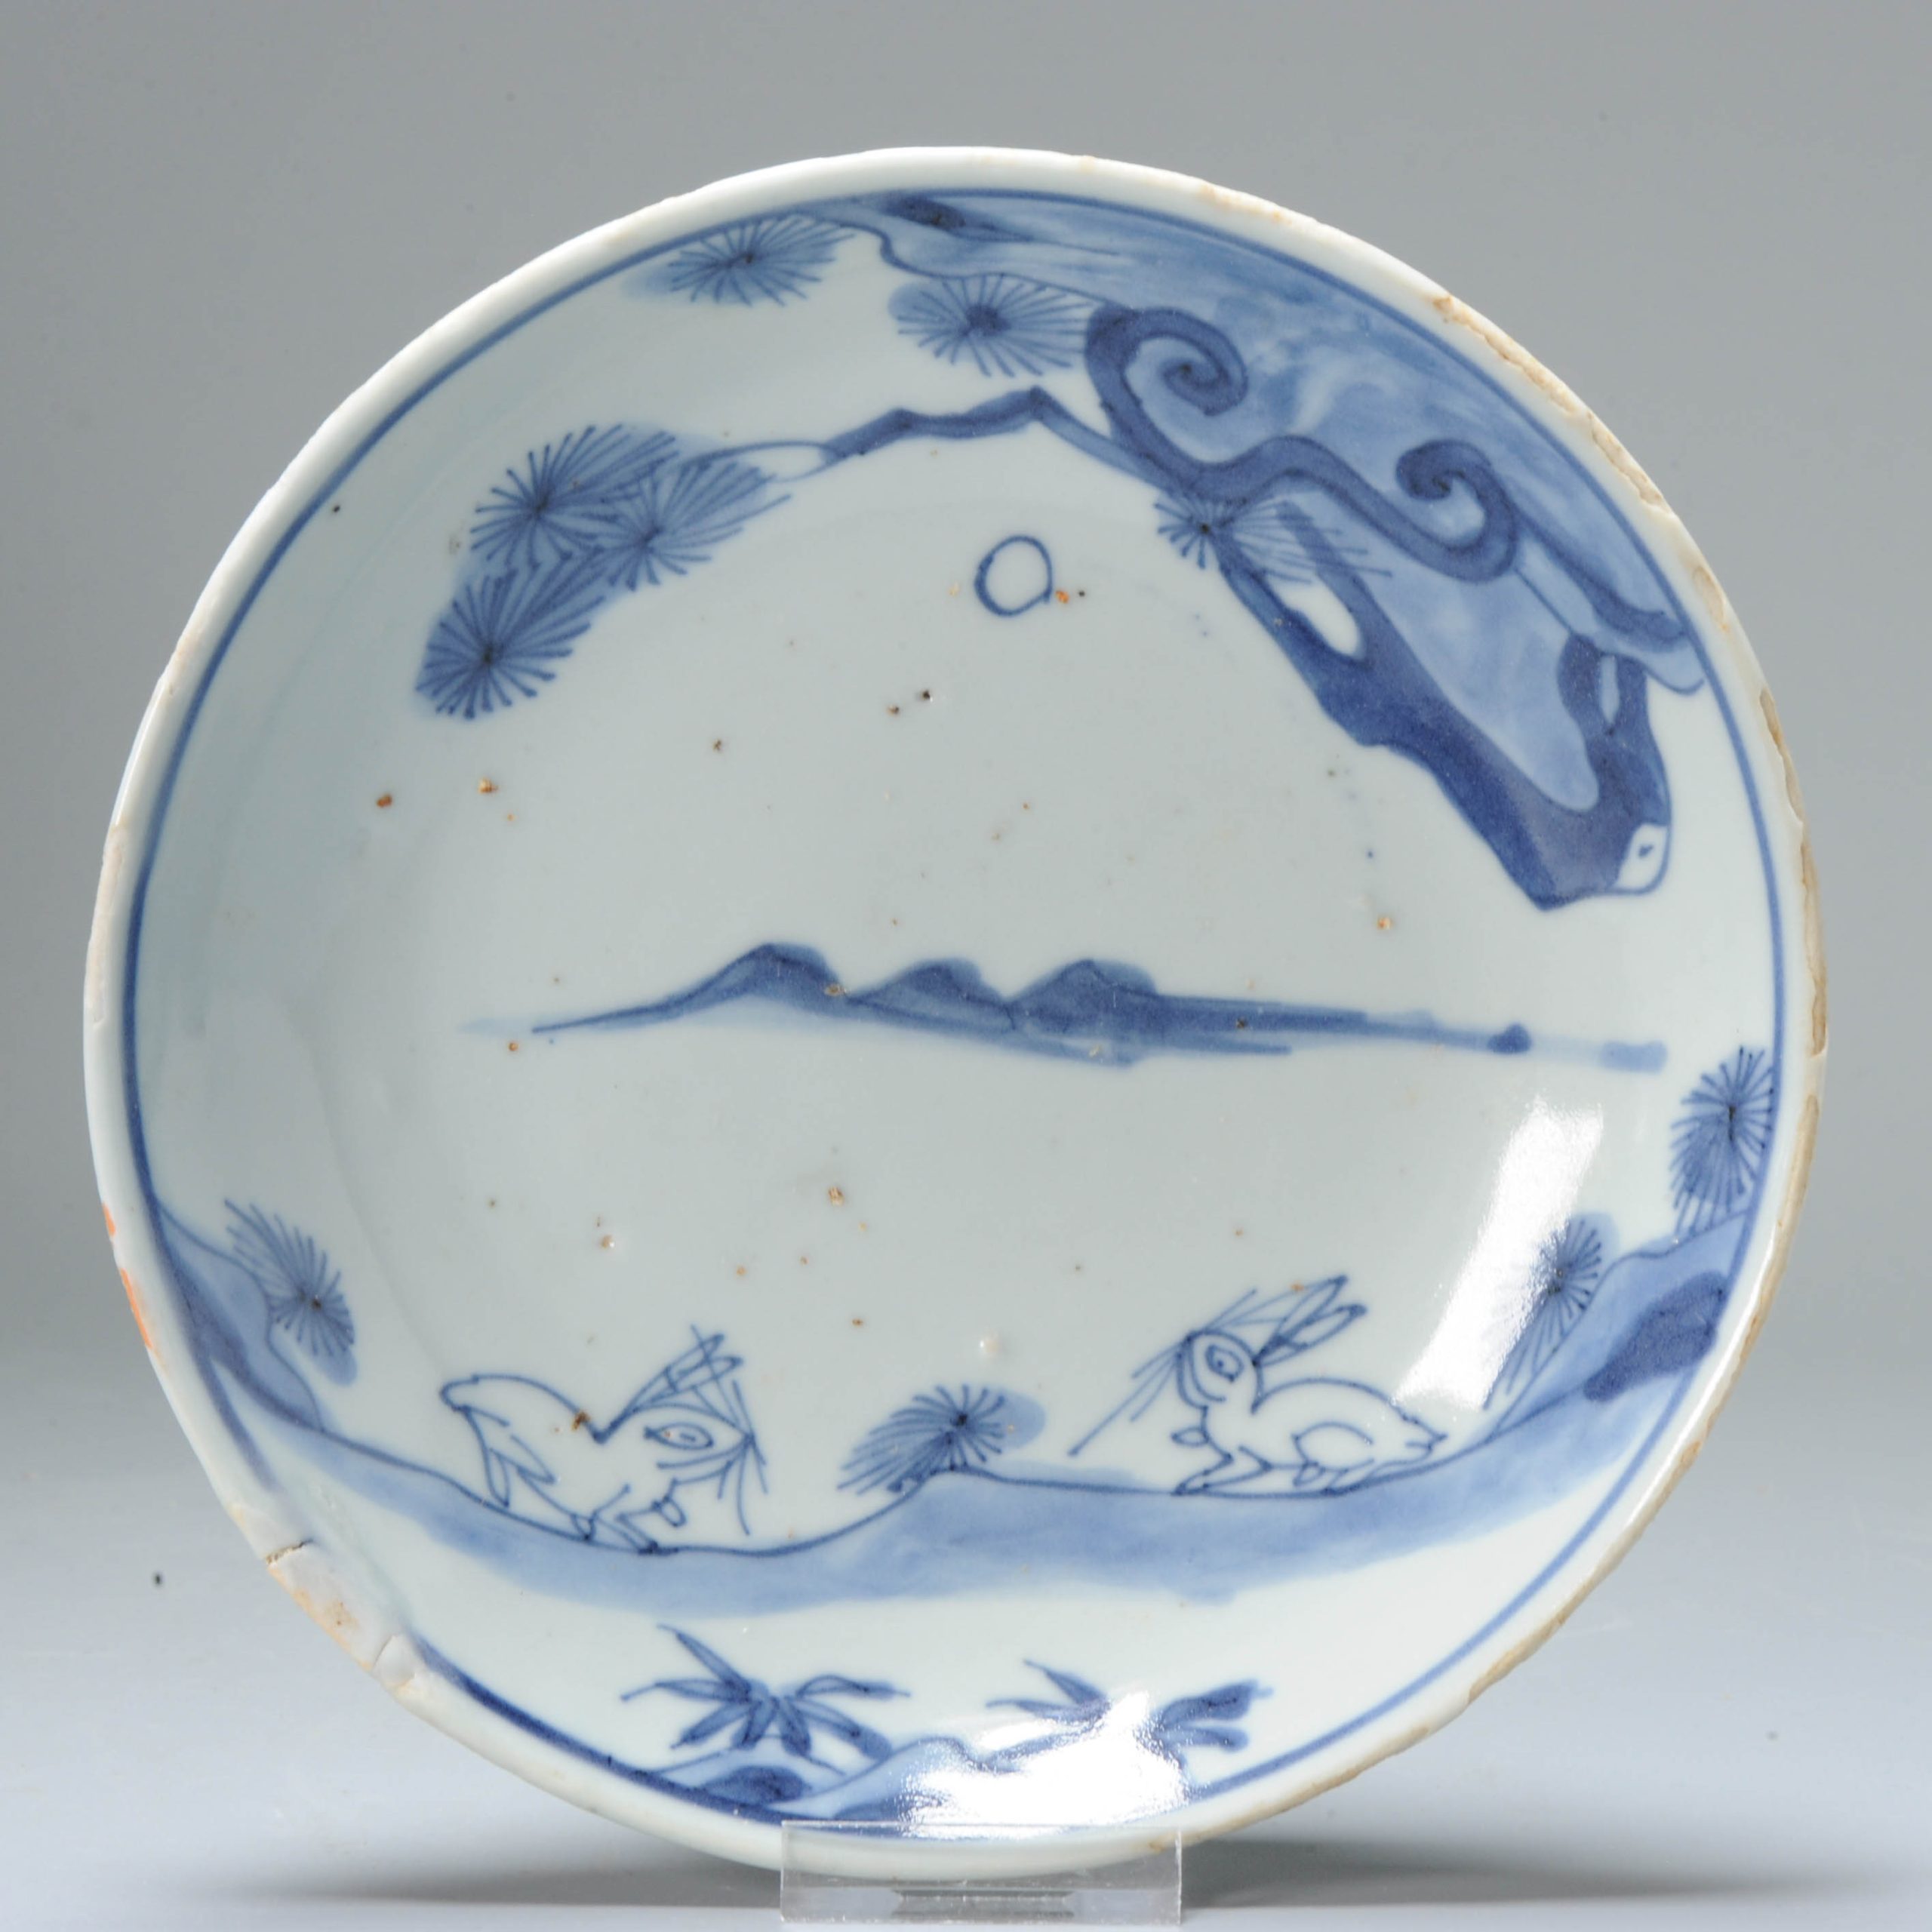 Rare Ca 1600-1640 Chinese Porcelain Ming Period Kosometsuke Plate Hare Moon